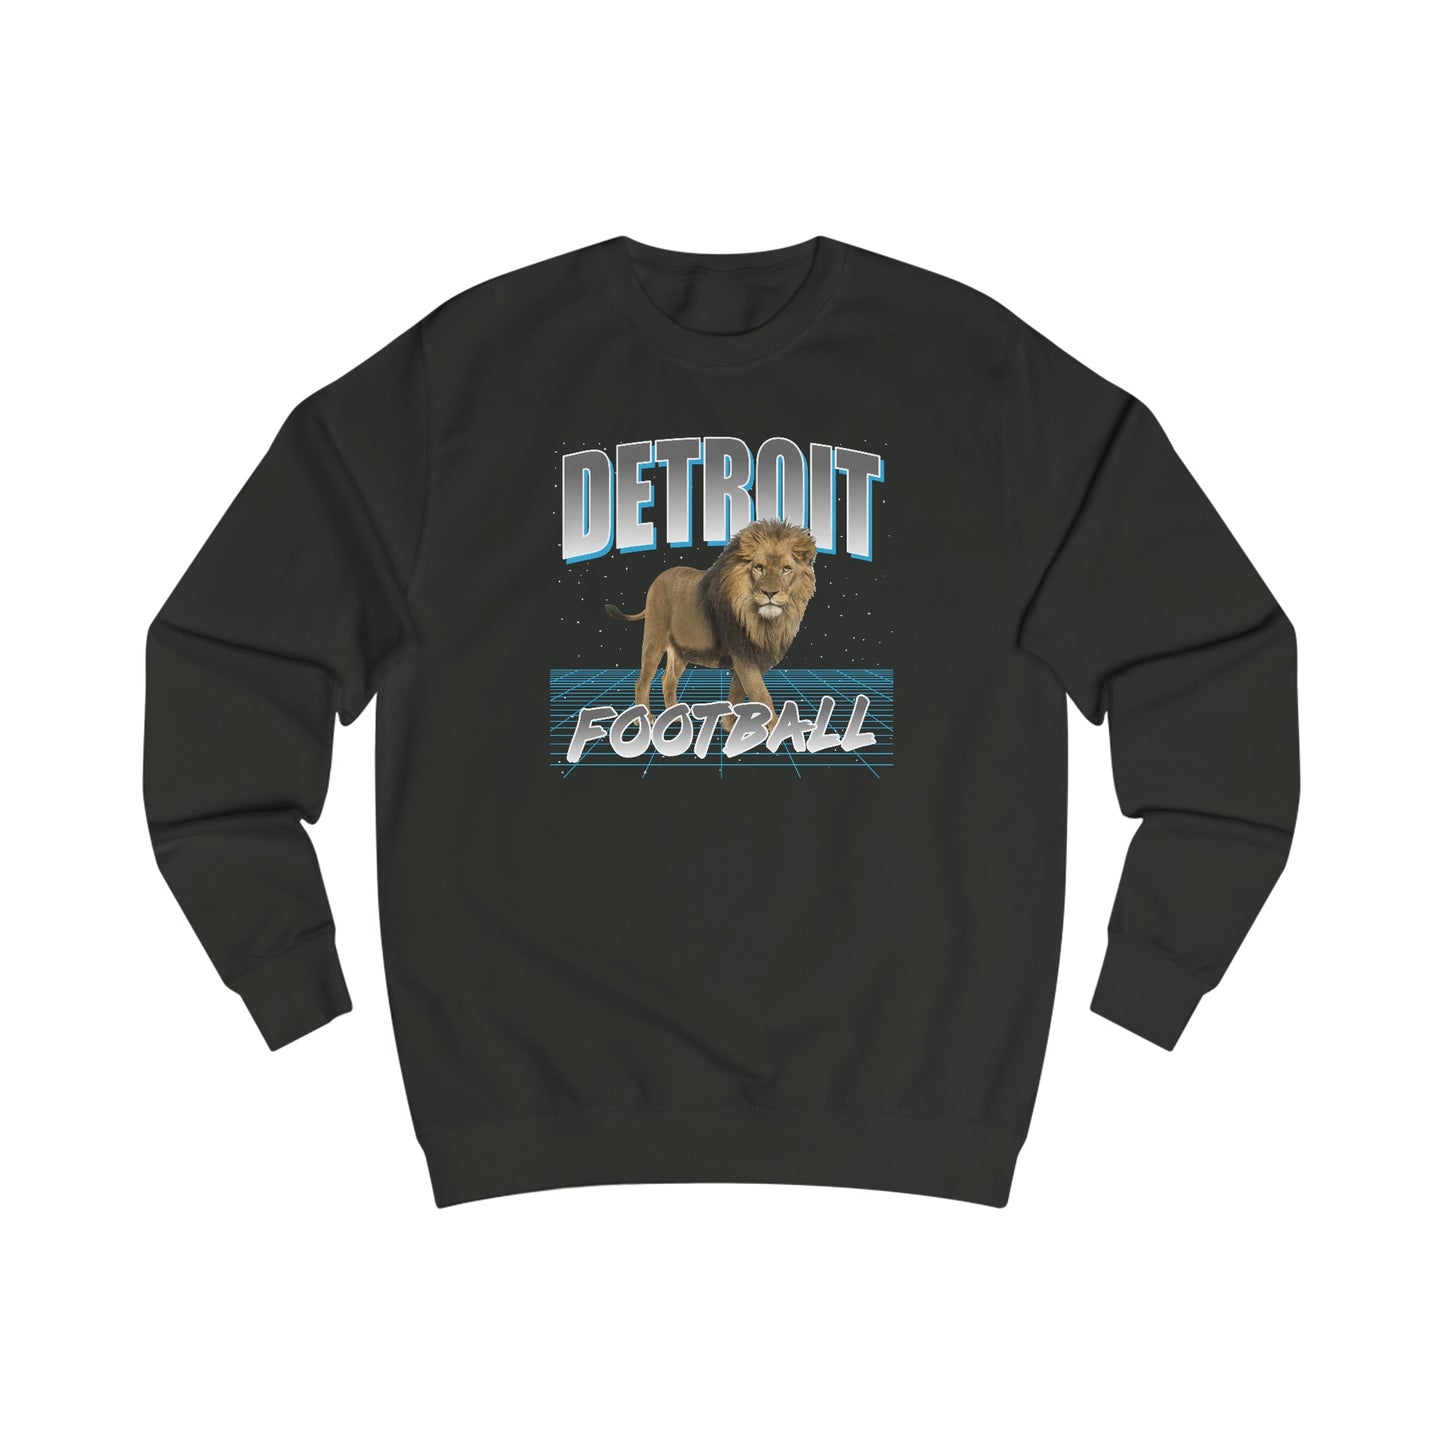 Detroit 82 Football Crew No Pill Sweatshirt | Downriver Clothing Apparel | Detroit Michigan | Downriver World